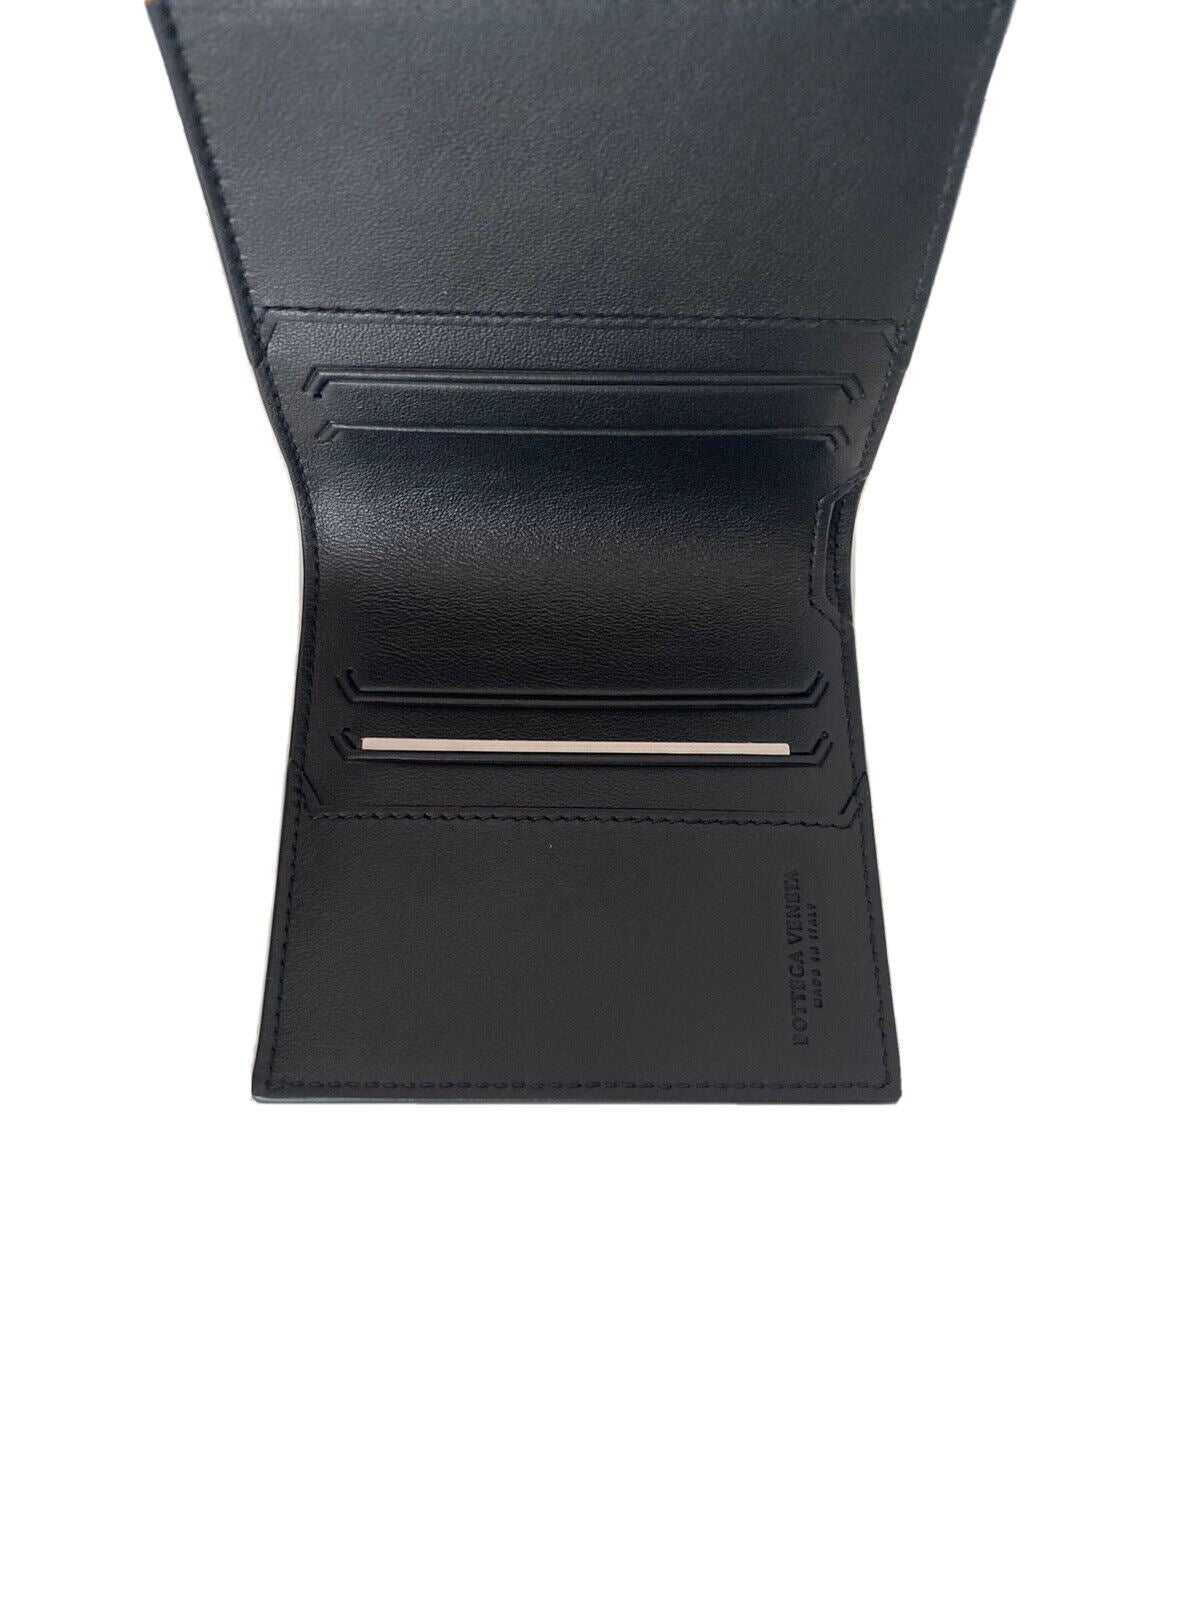 NWT $750 Bottega Veneta Bi-fold Black Wallet French Leather and Alligator 583611